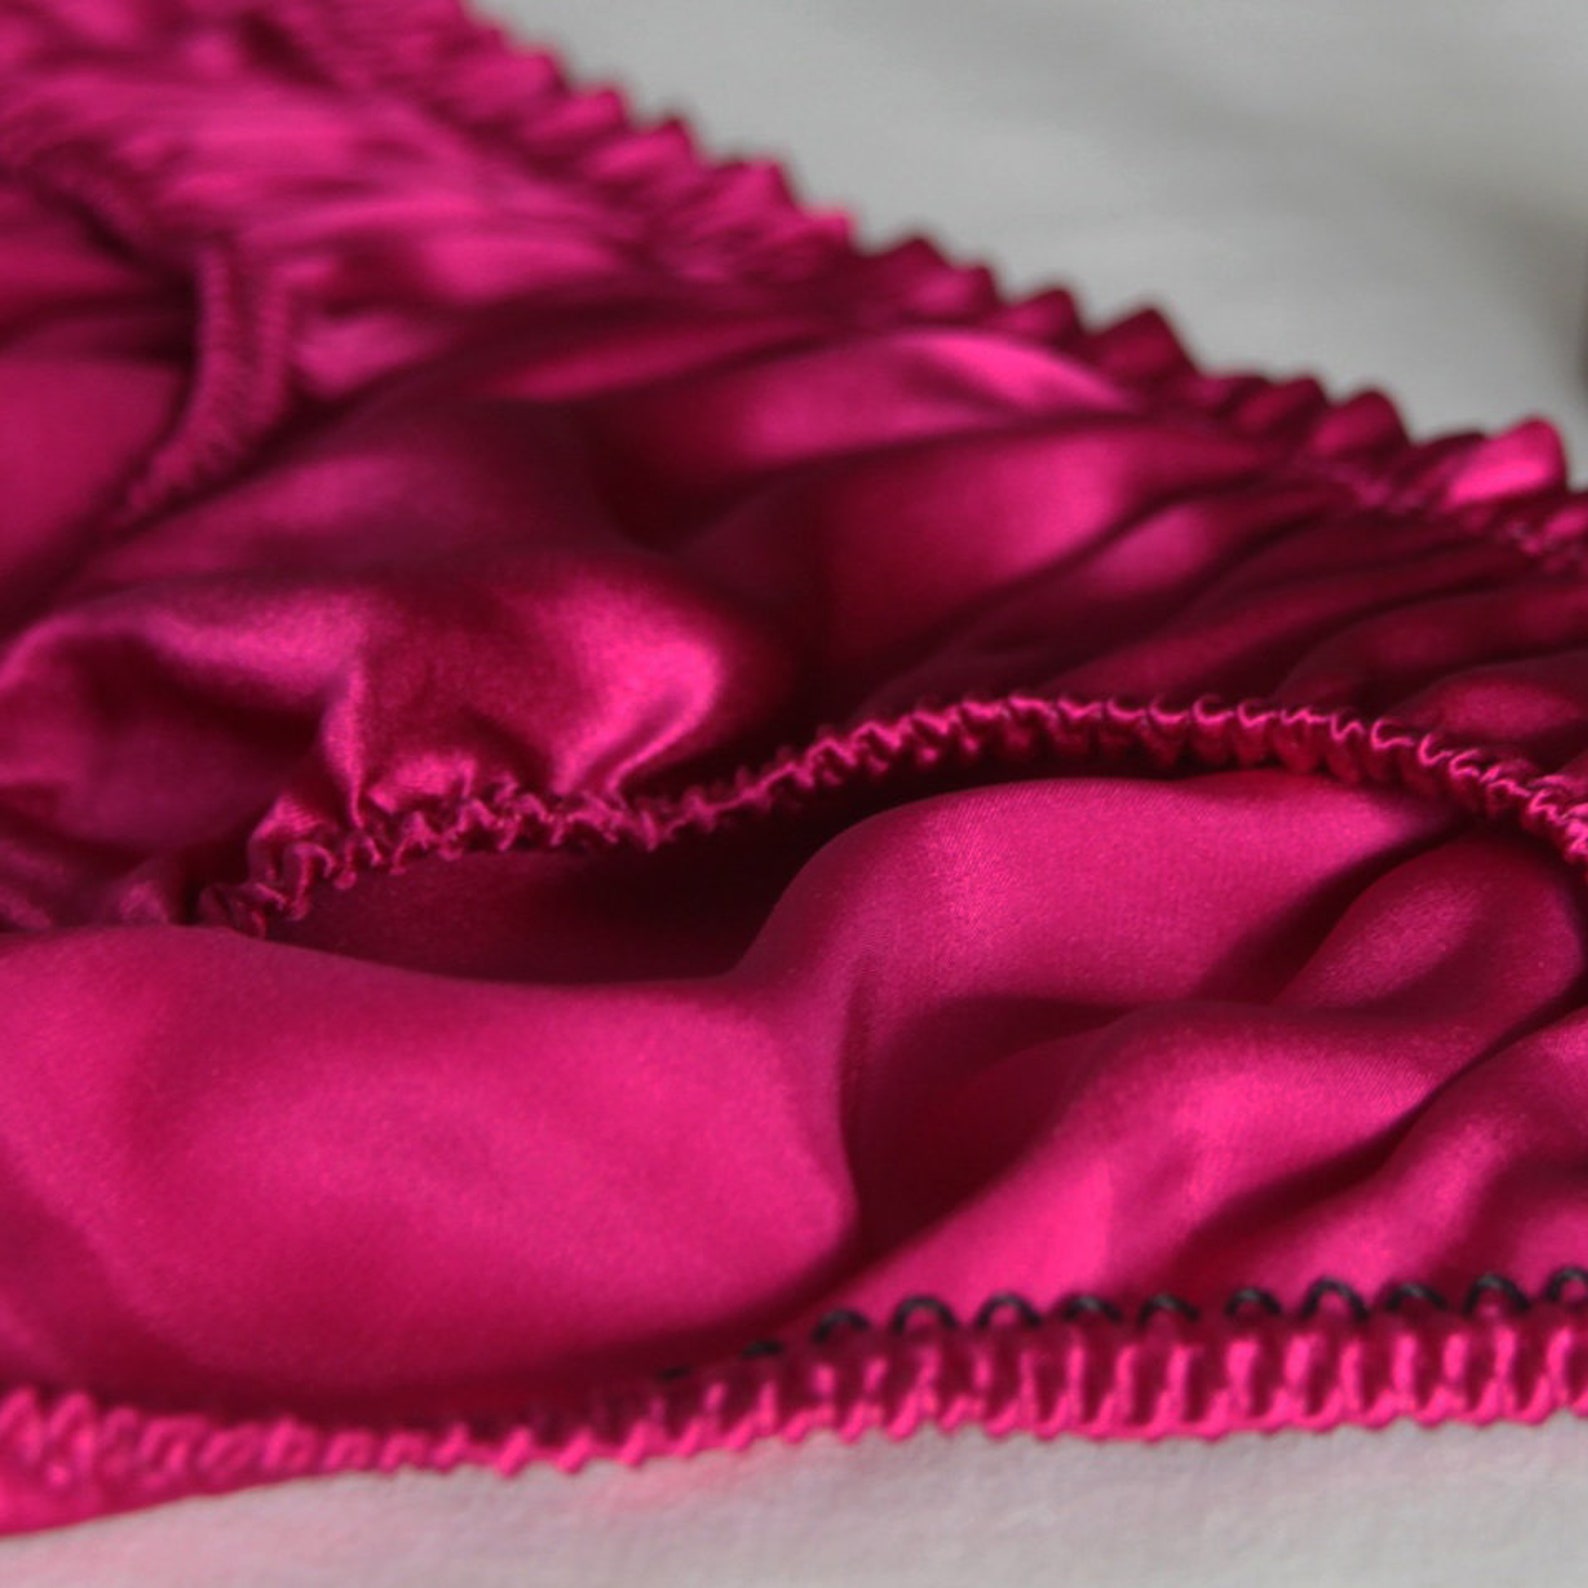 French Underwear Sewing Pattern PDF | Etsy